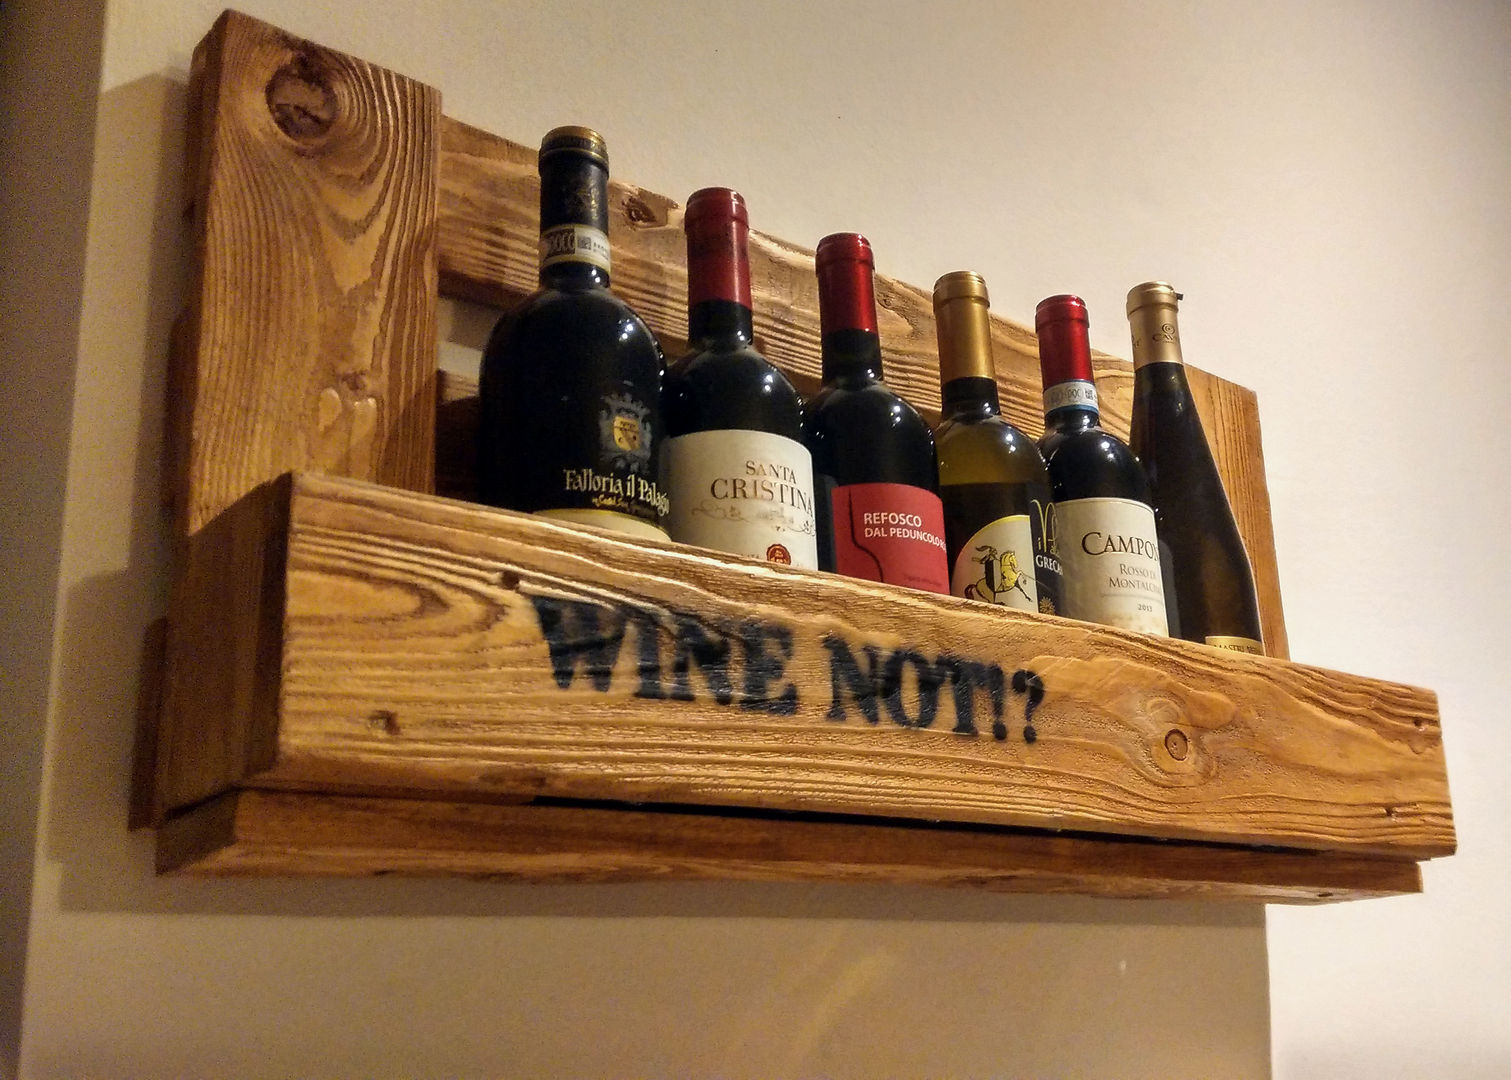 Portabottiglie WINE NOT!?, IDEA - Ivan de Angelis IDEA - Ivan de Angelis 러스틱스타일 와인 저장고 솔리드 우드 멀티 컬러 와인 저장실